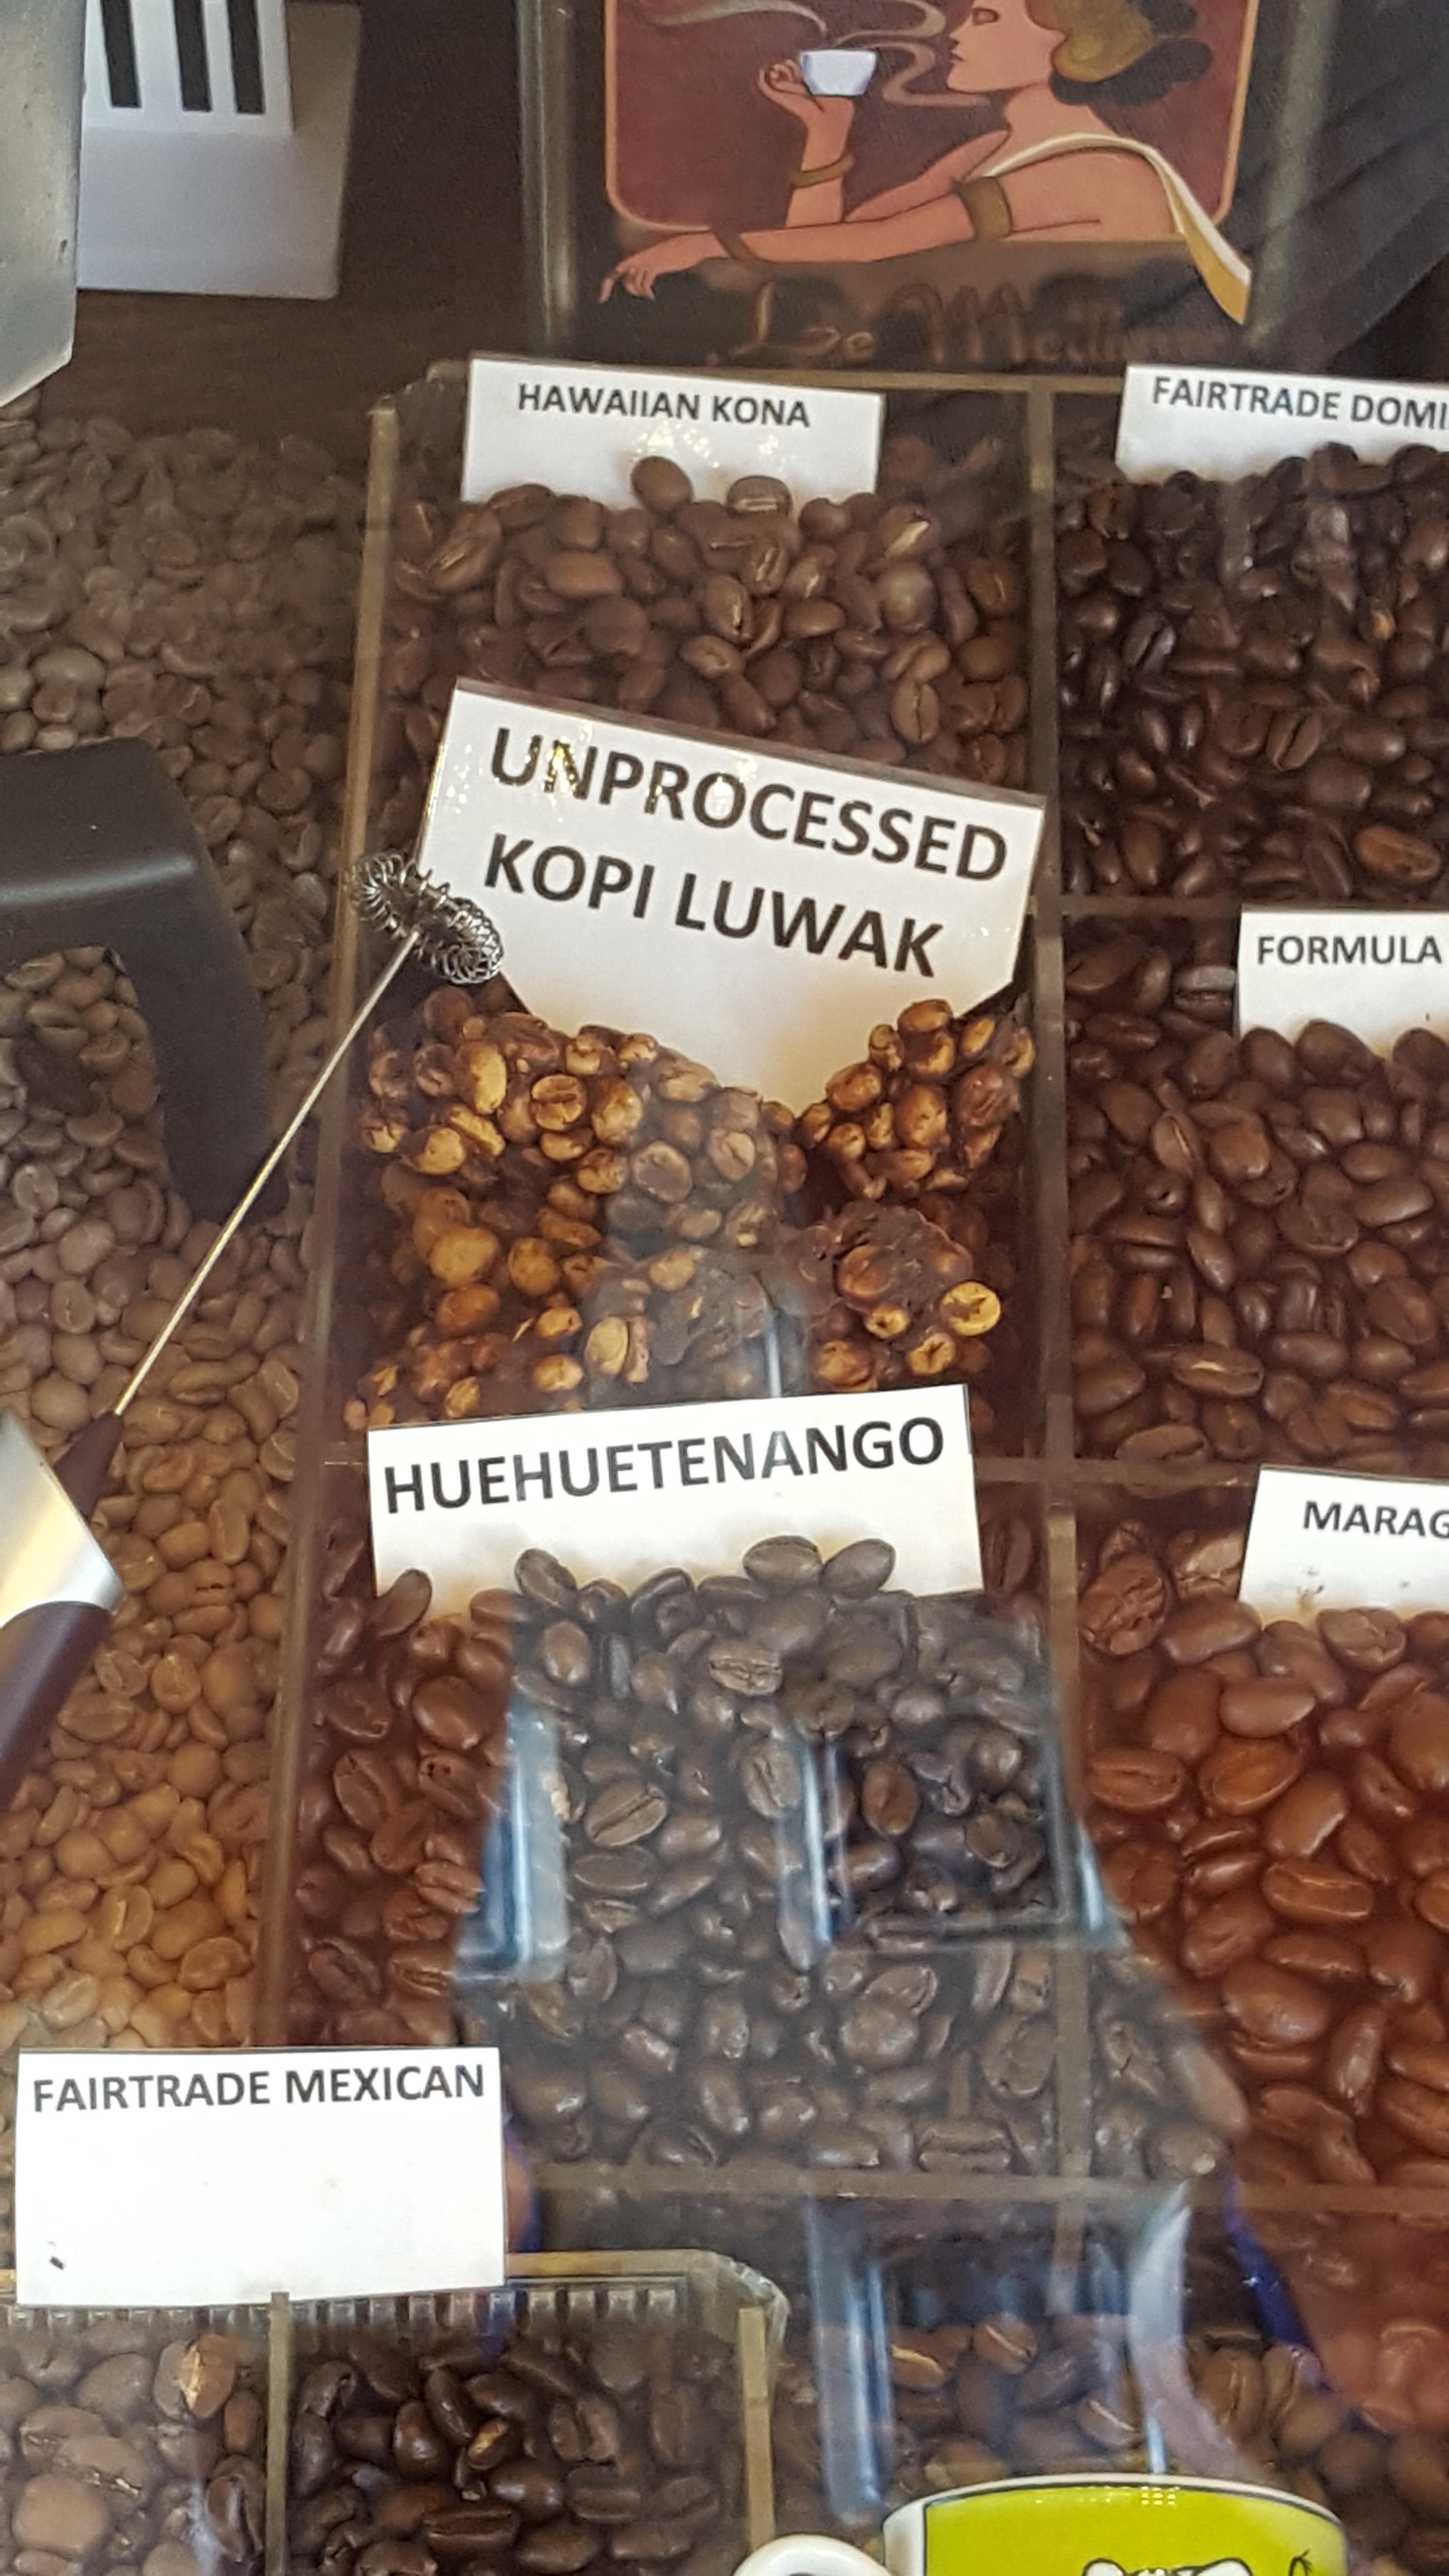 snack - Hawaran Kona Fairtrade Do Unprocessed Kopi Luwak Formula Huehuetenango Marac Fairtrade Mexican